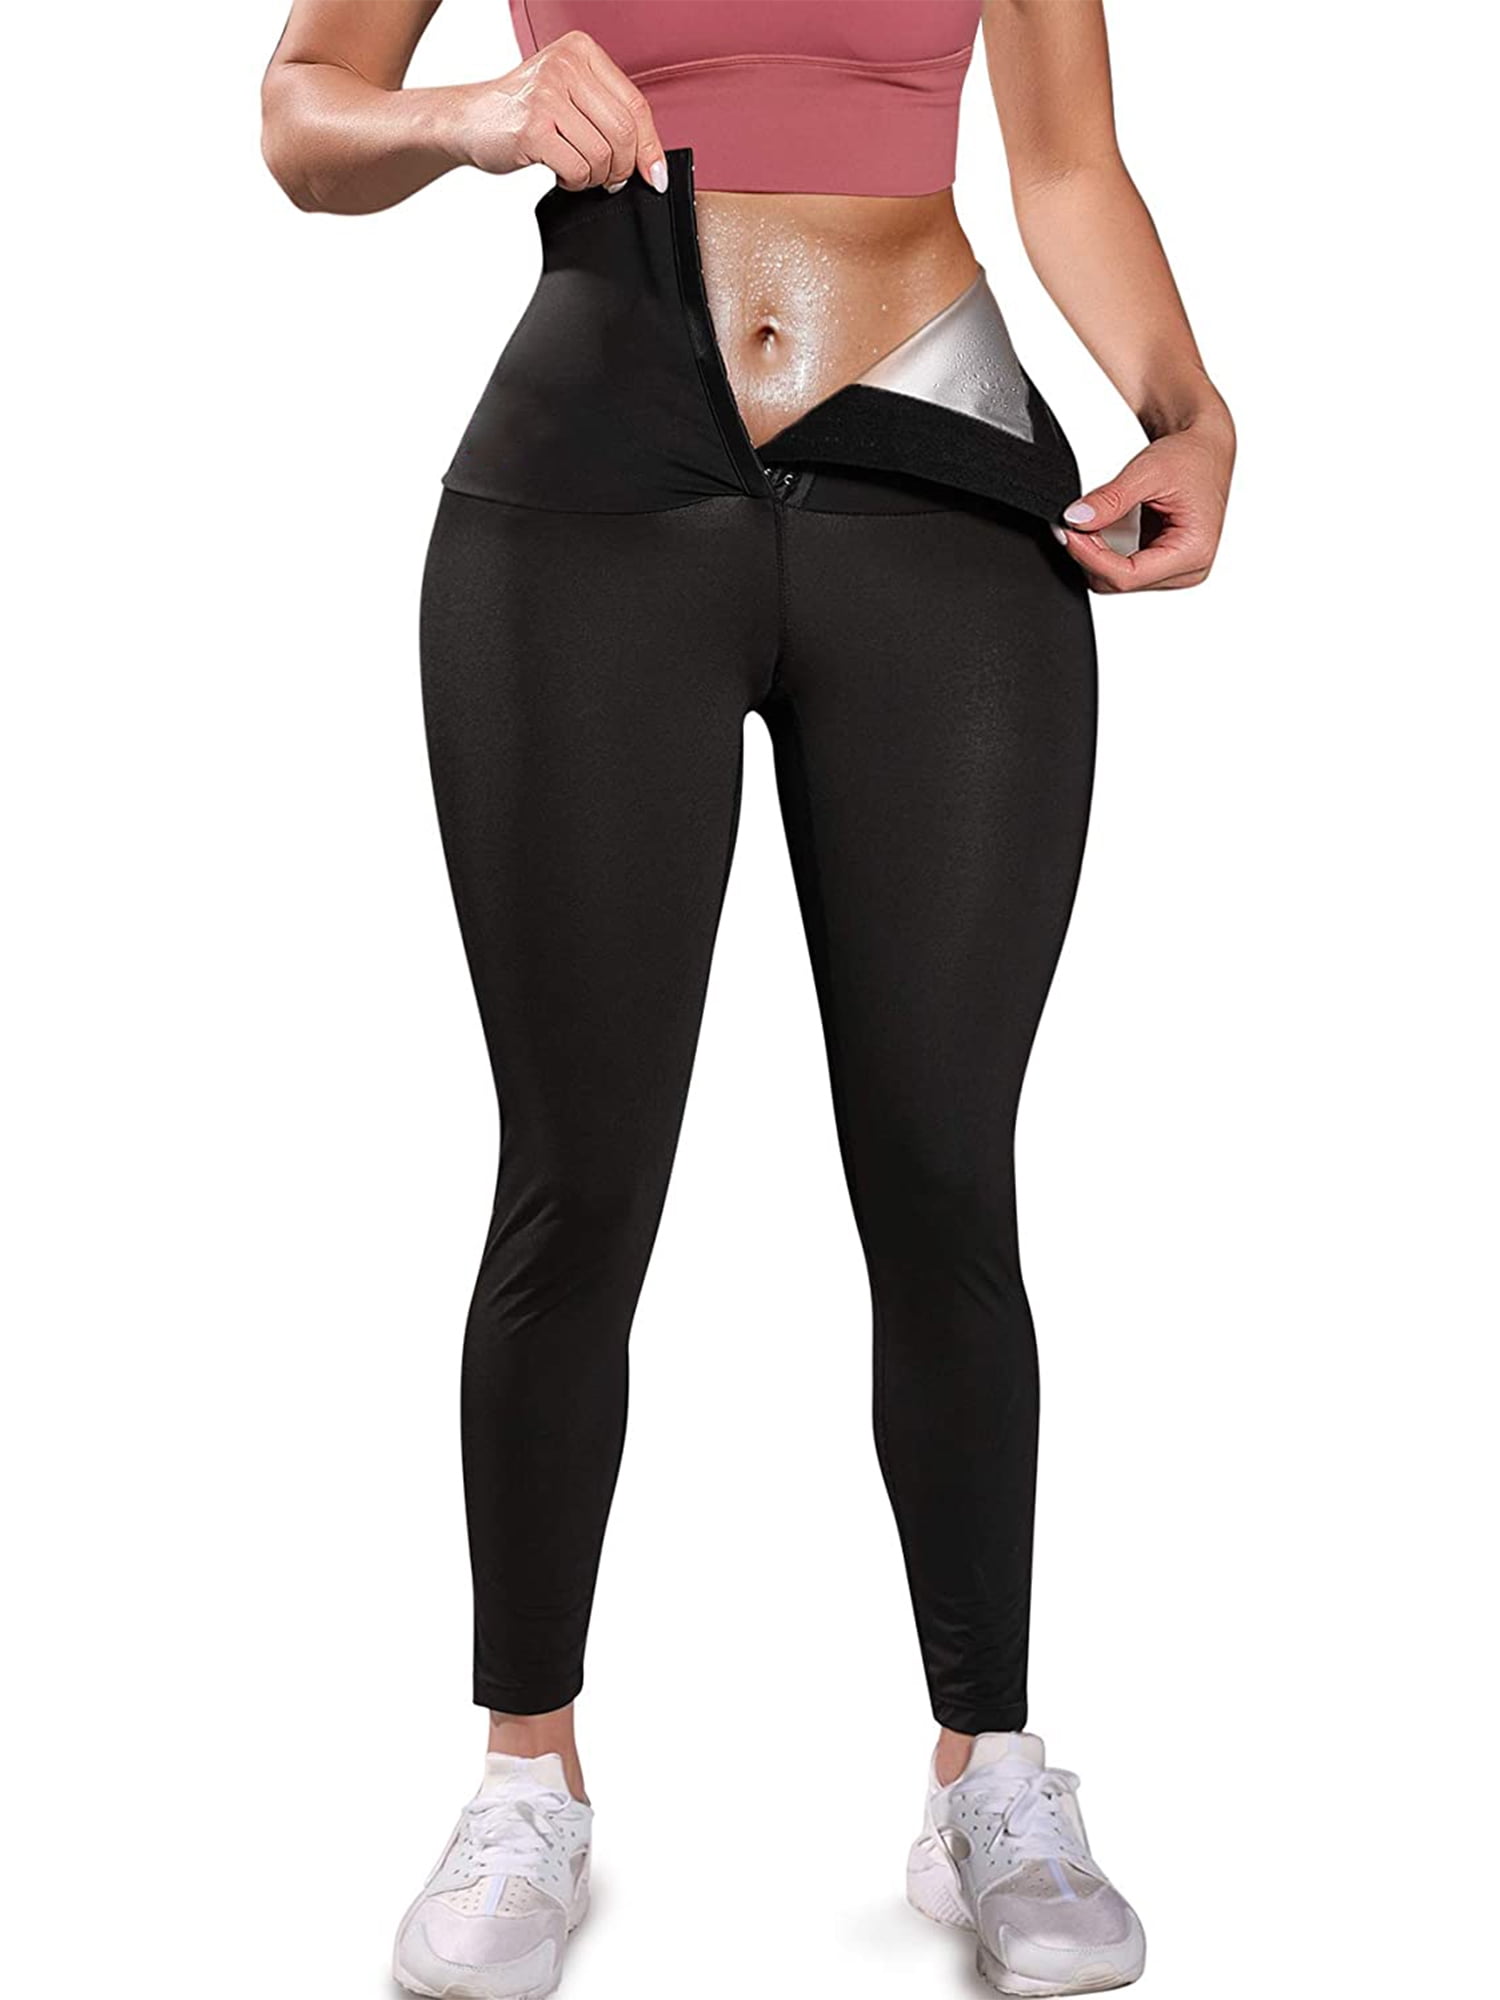 Aayomet Sweat Sauna Pants for Women High Waist Trainer Slimming Leggings  Compression Petite plus Size Yoga Pants (Silver, XXXXL) 